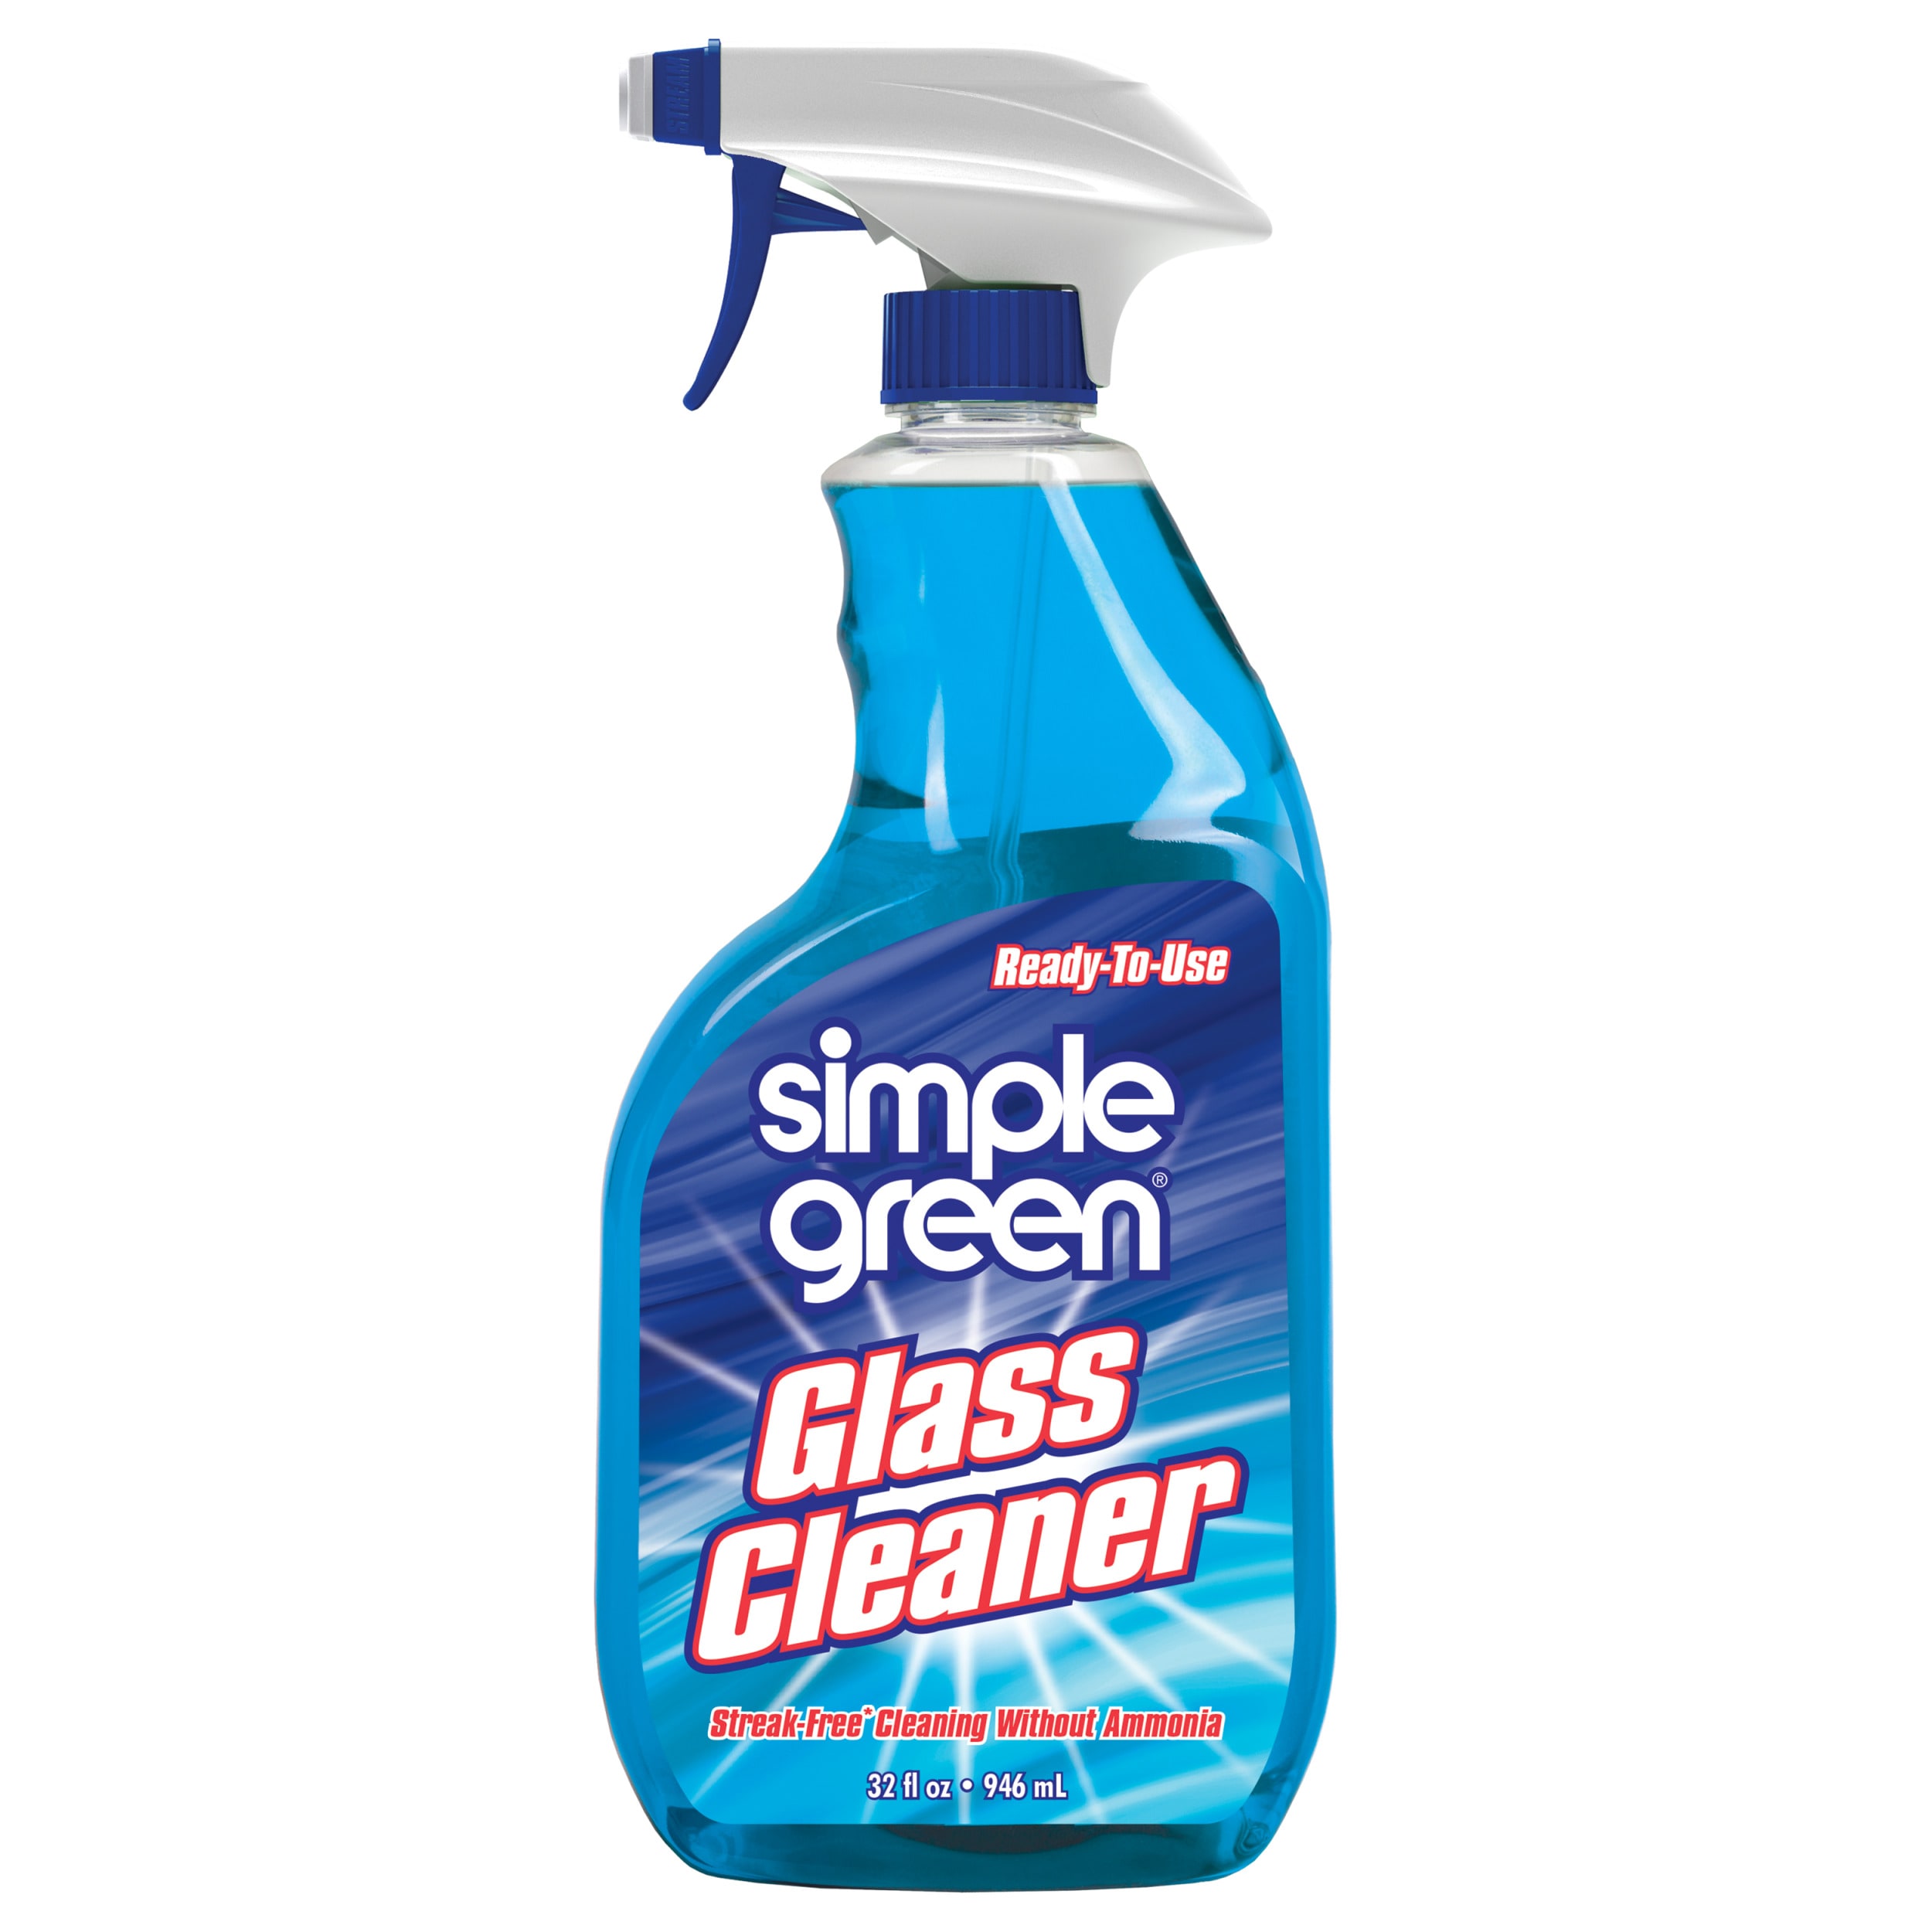 Windex Ammonia-Free 23-fl oz Pump Spray Glass Cleaner